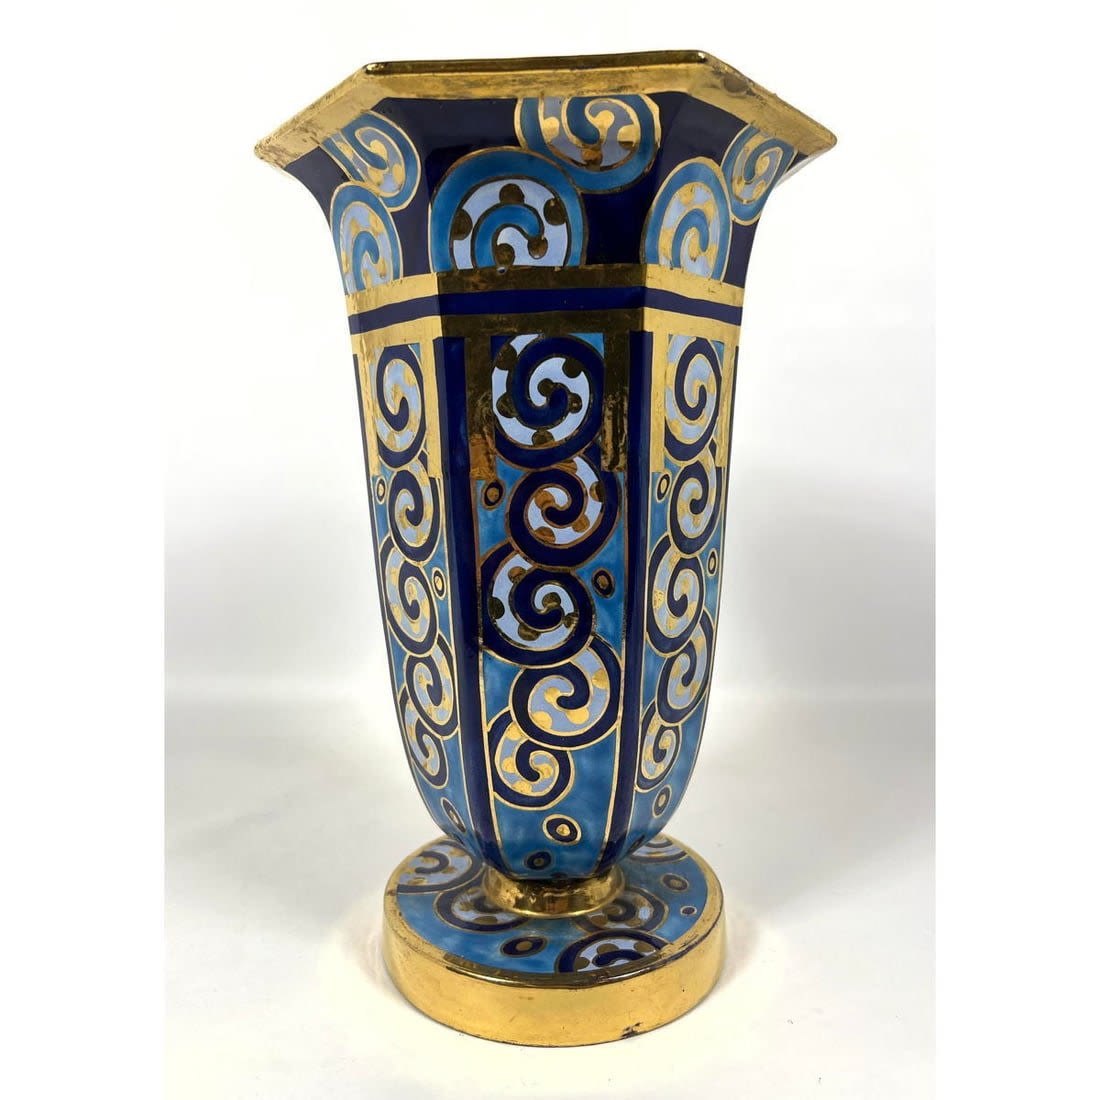 Ceramic Art Deco Vase with an interplay